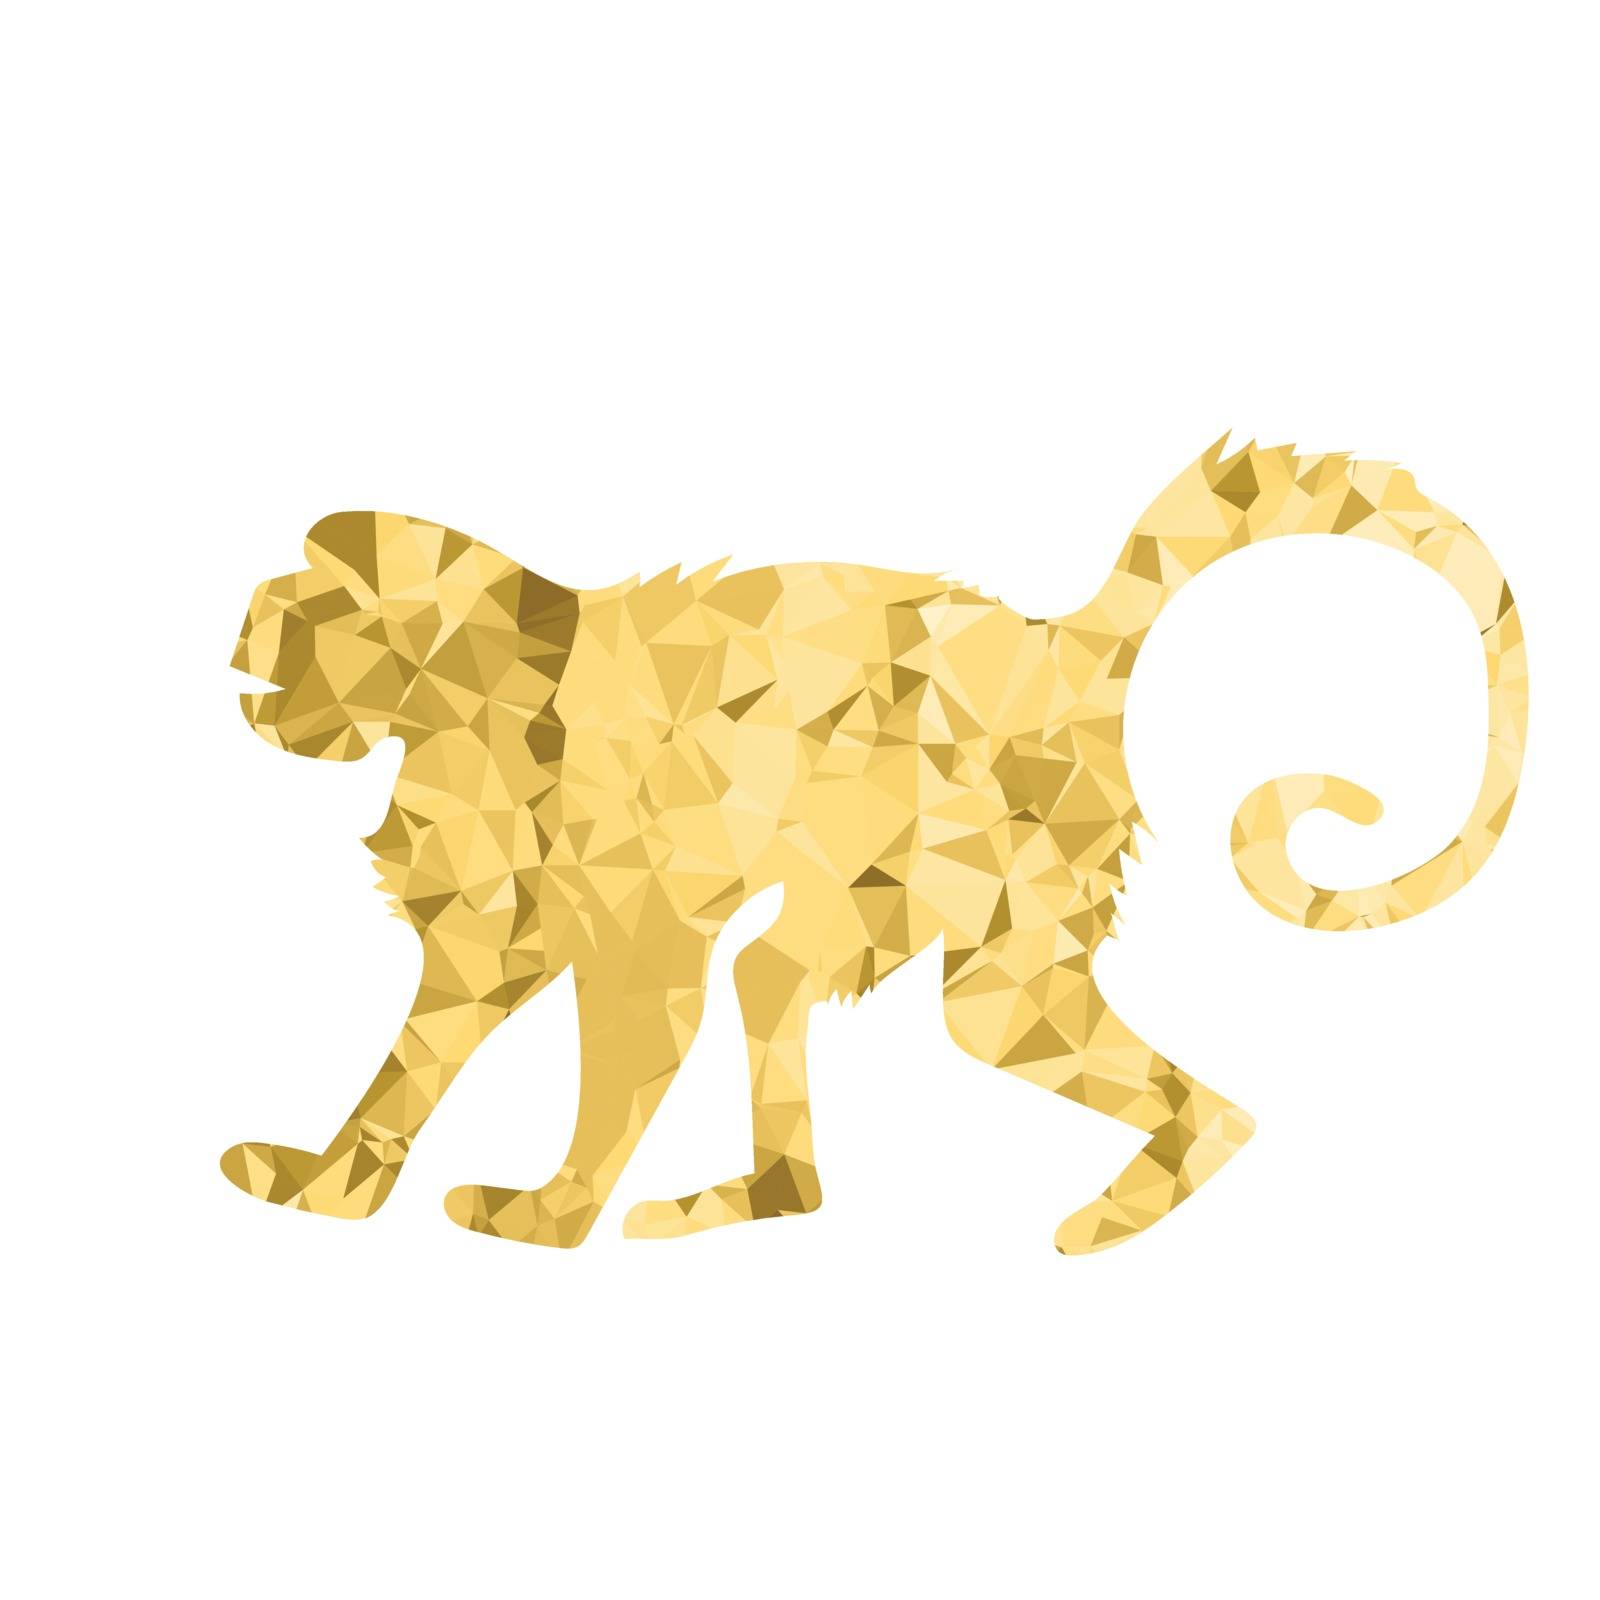 Monkey Polygonal Silhouette on White Background. Wild Tropical Mammal Animal Ape Icon. Symbol of Zodiac. Low Poly Design by valeo5